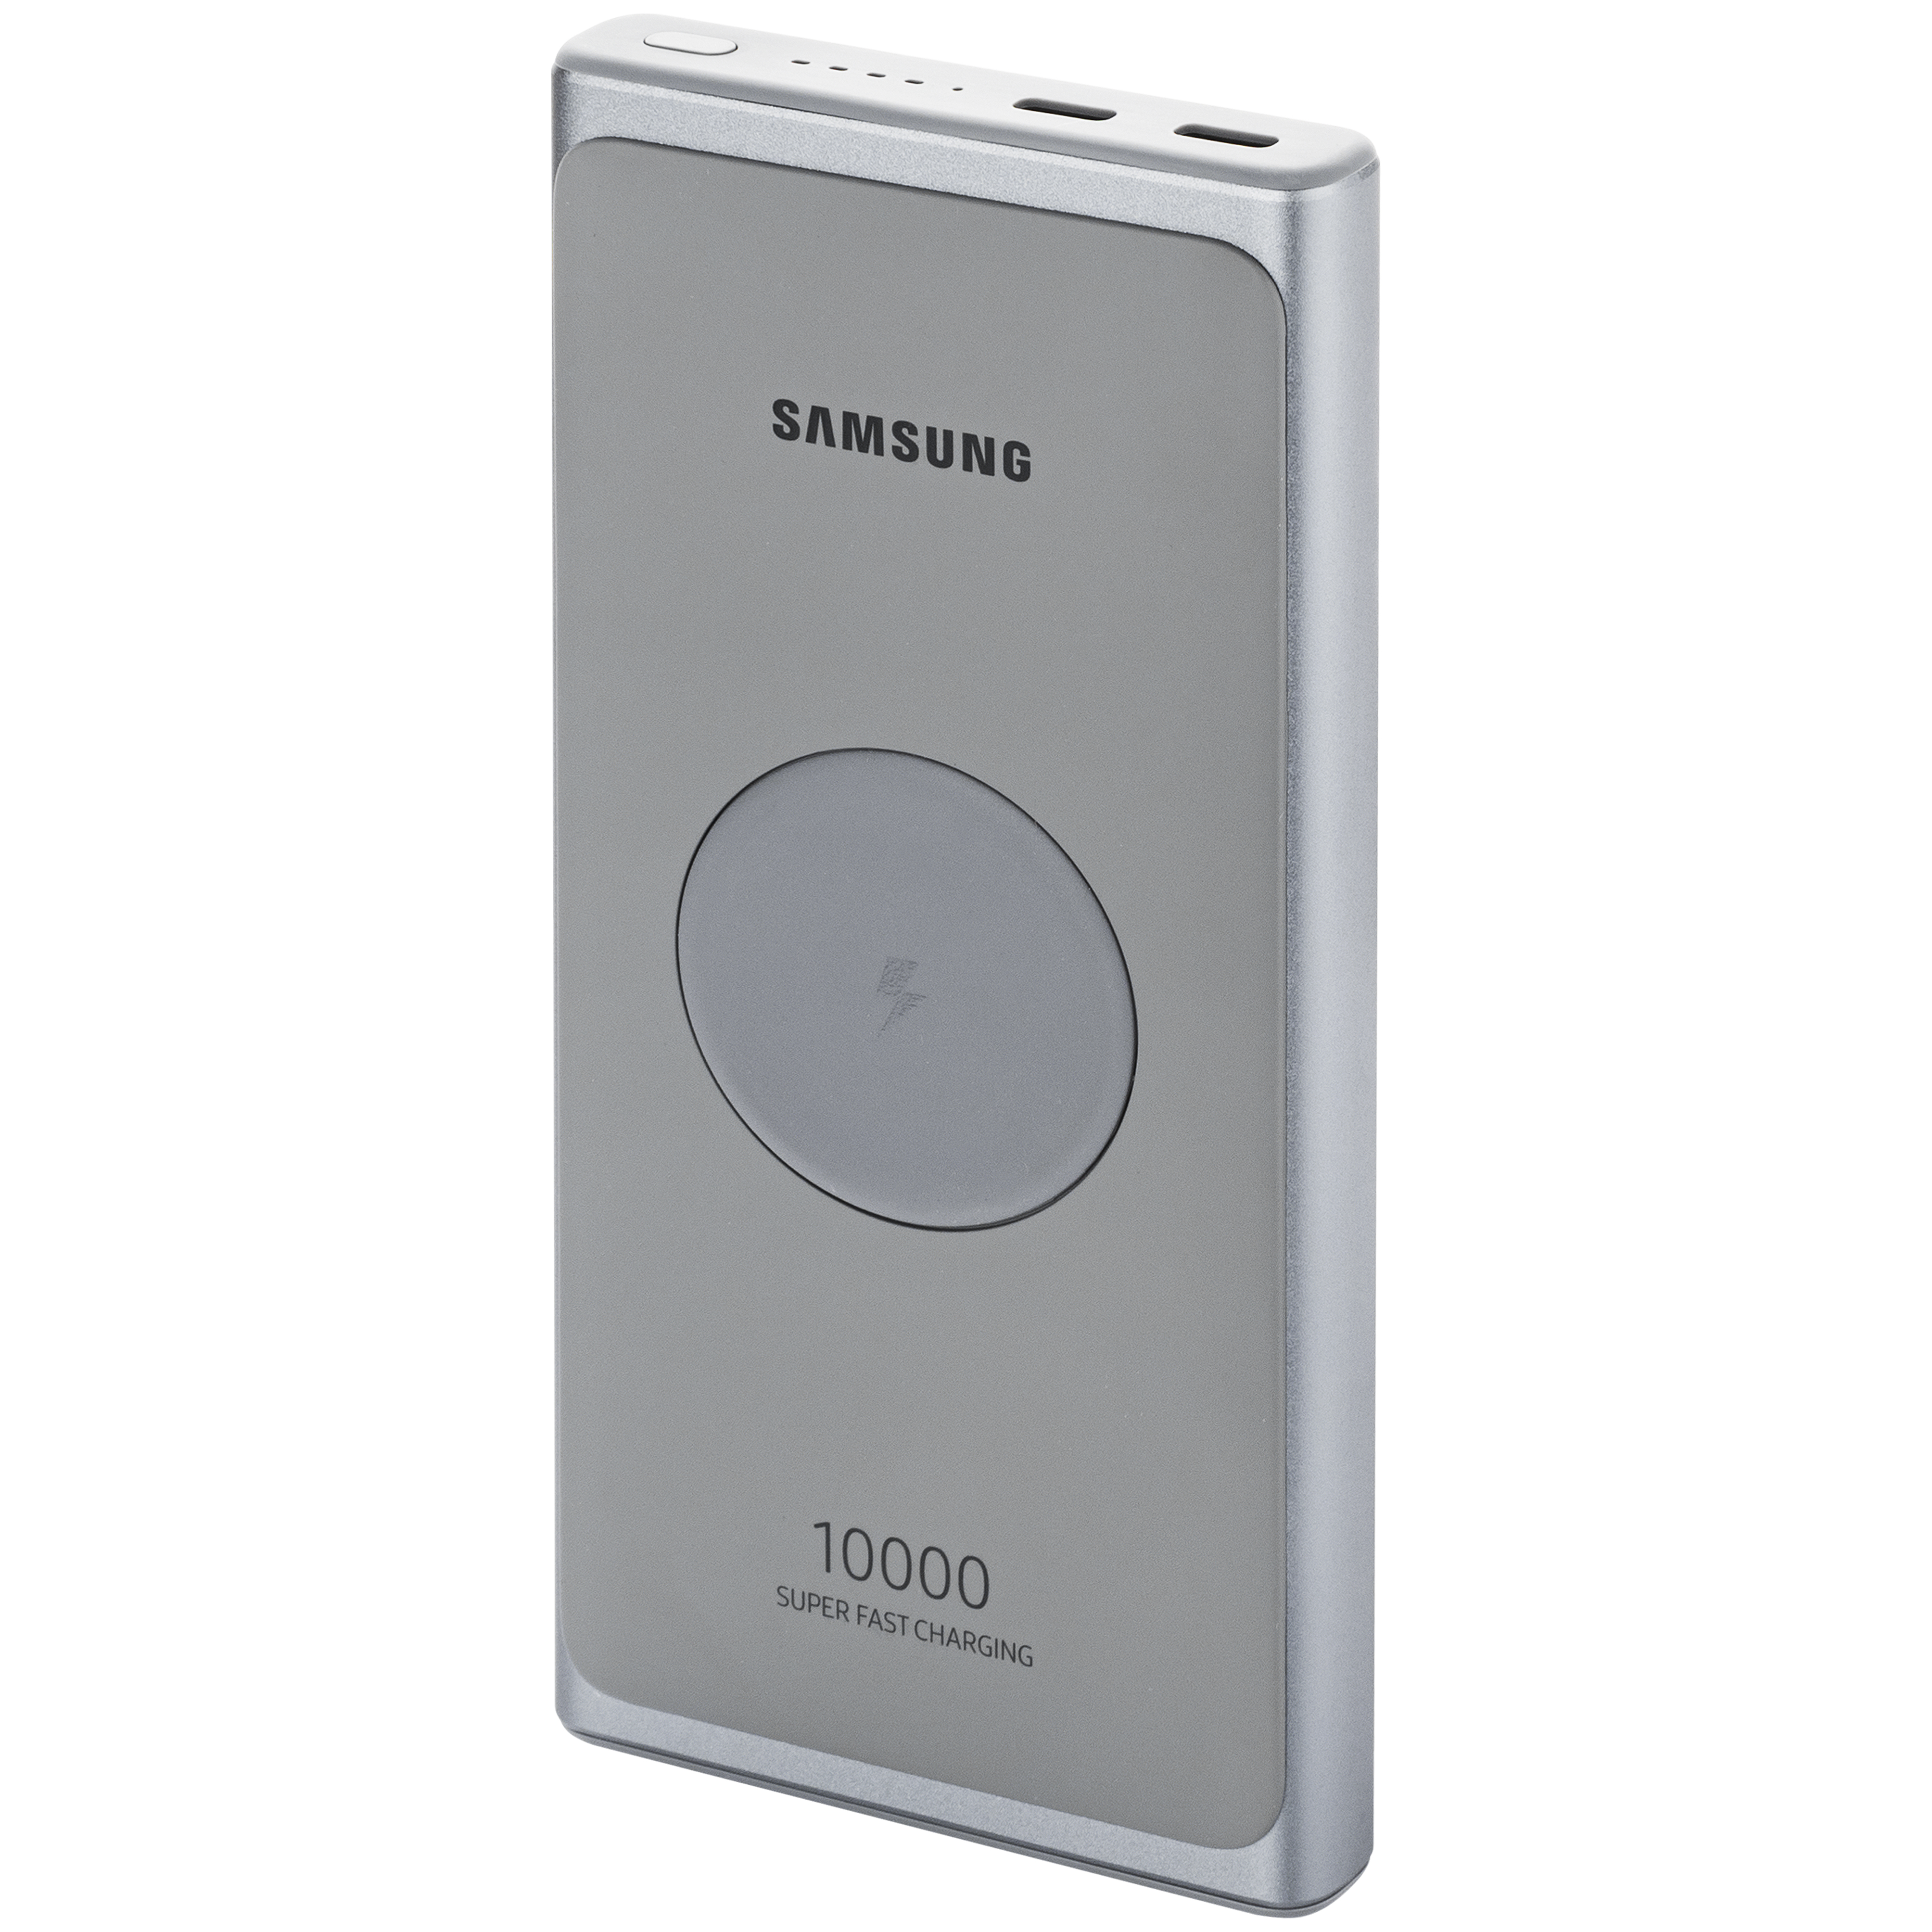 Samsung EB-U3300, 10000mAh, 25W, FC, USB Type-C, Wirel. Char. Gray (EB-U3300XJRGRU)